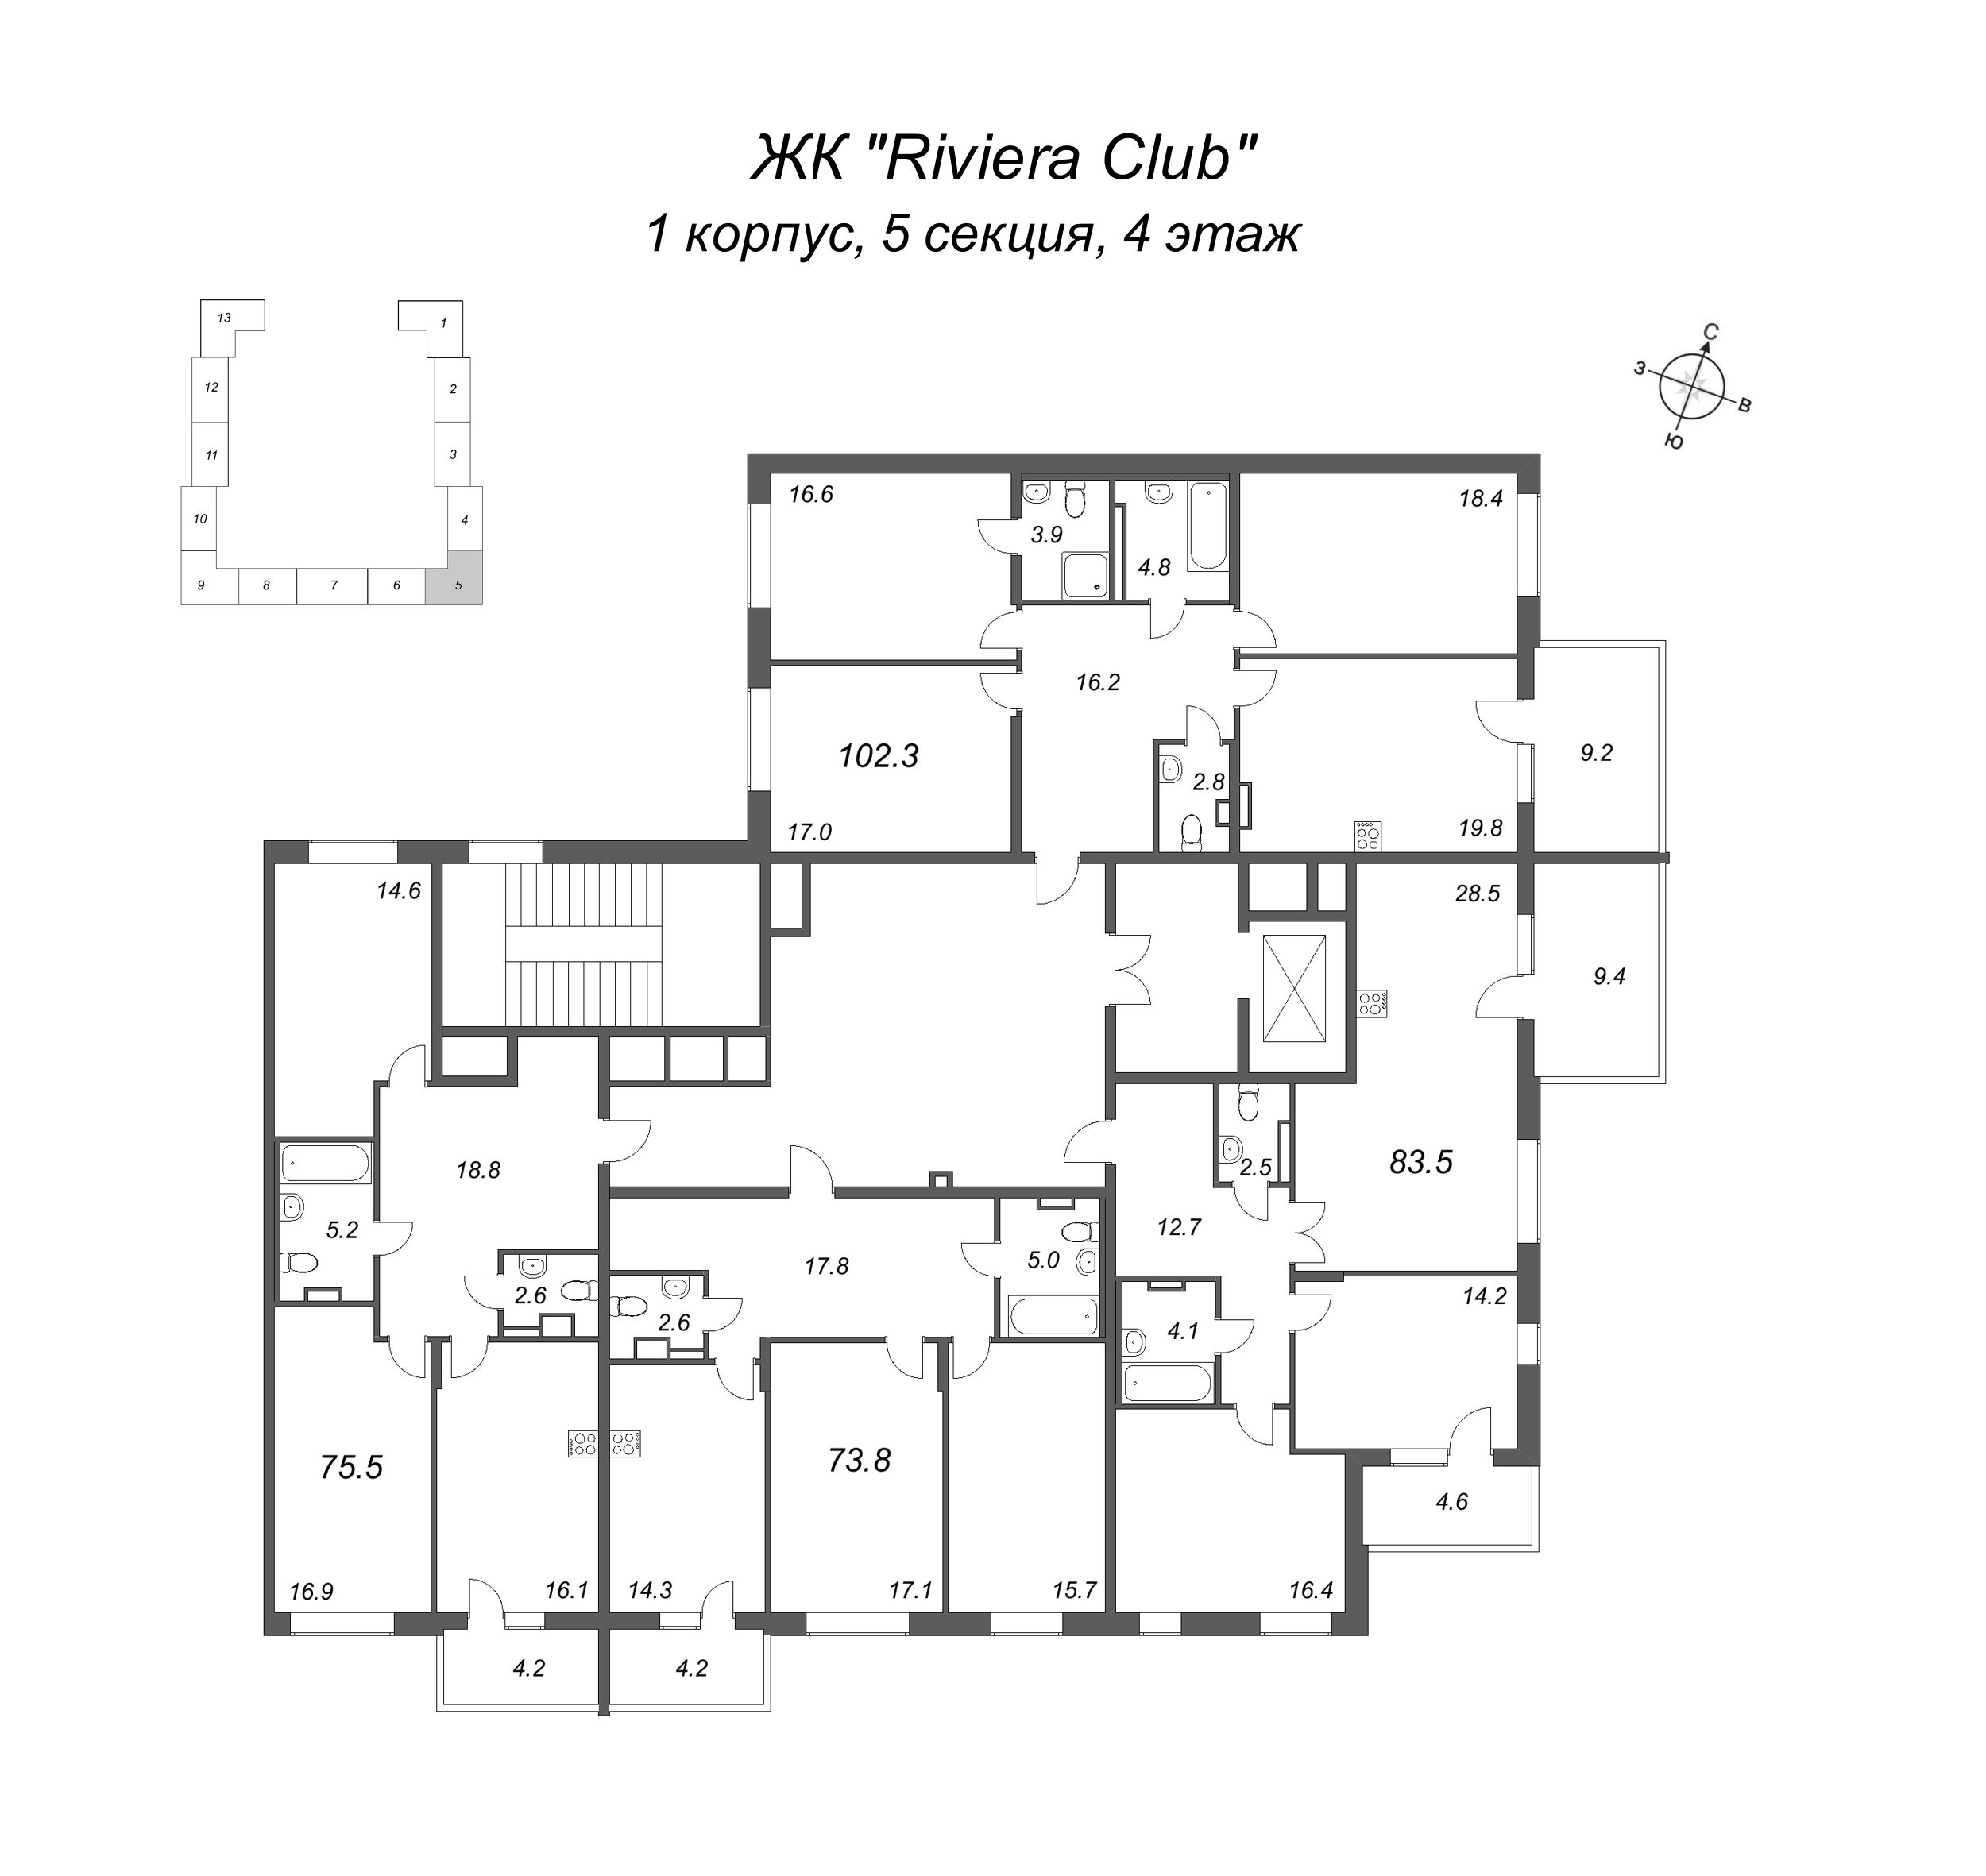 3-комнатная (Евро) квартира, 75.5 м² в ЖК "Riviera Club" - планировка этажа